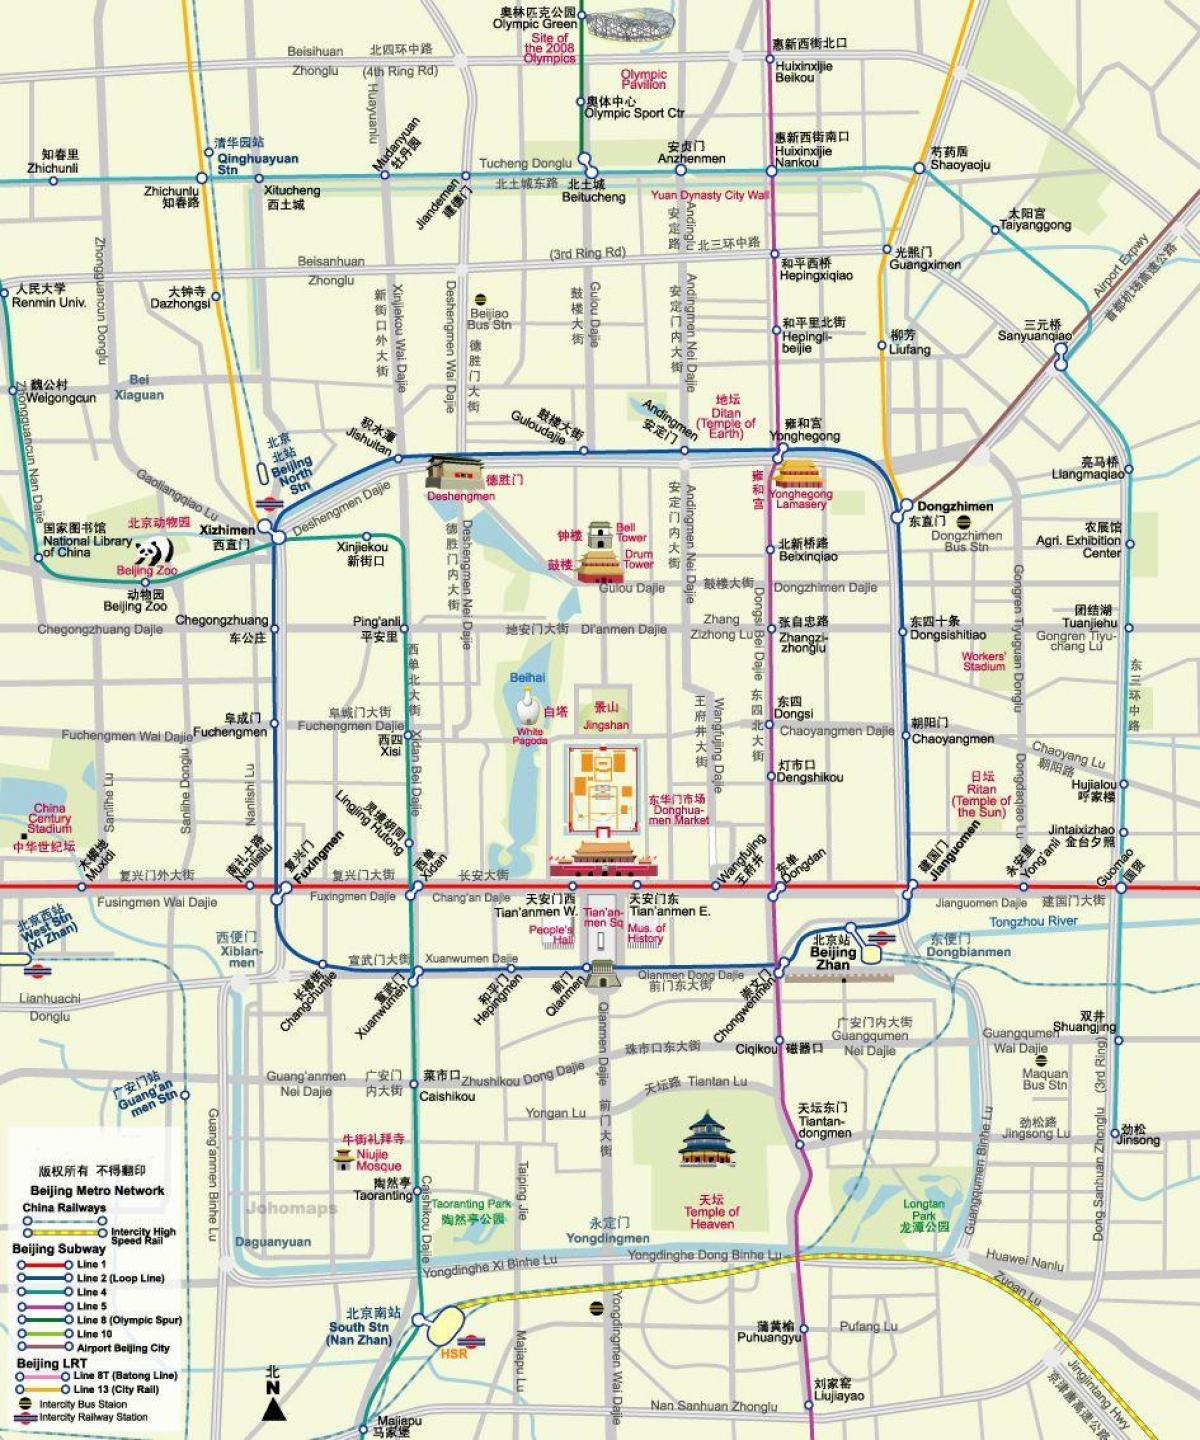 Mapa de las visitas a pie de Pekín (Peking)